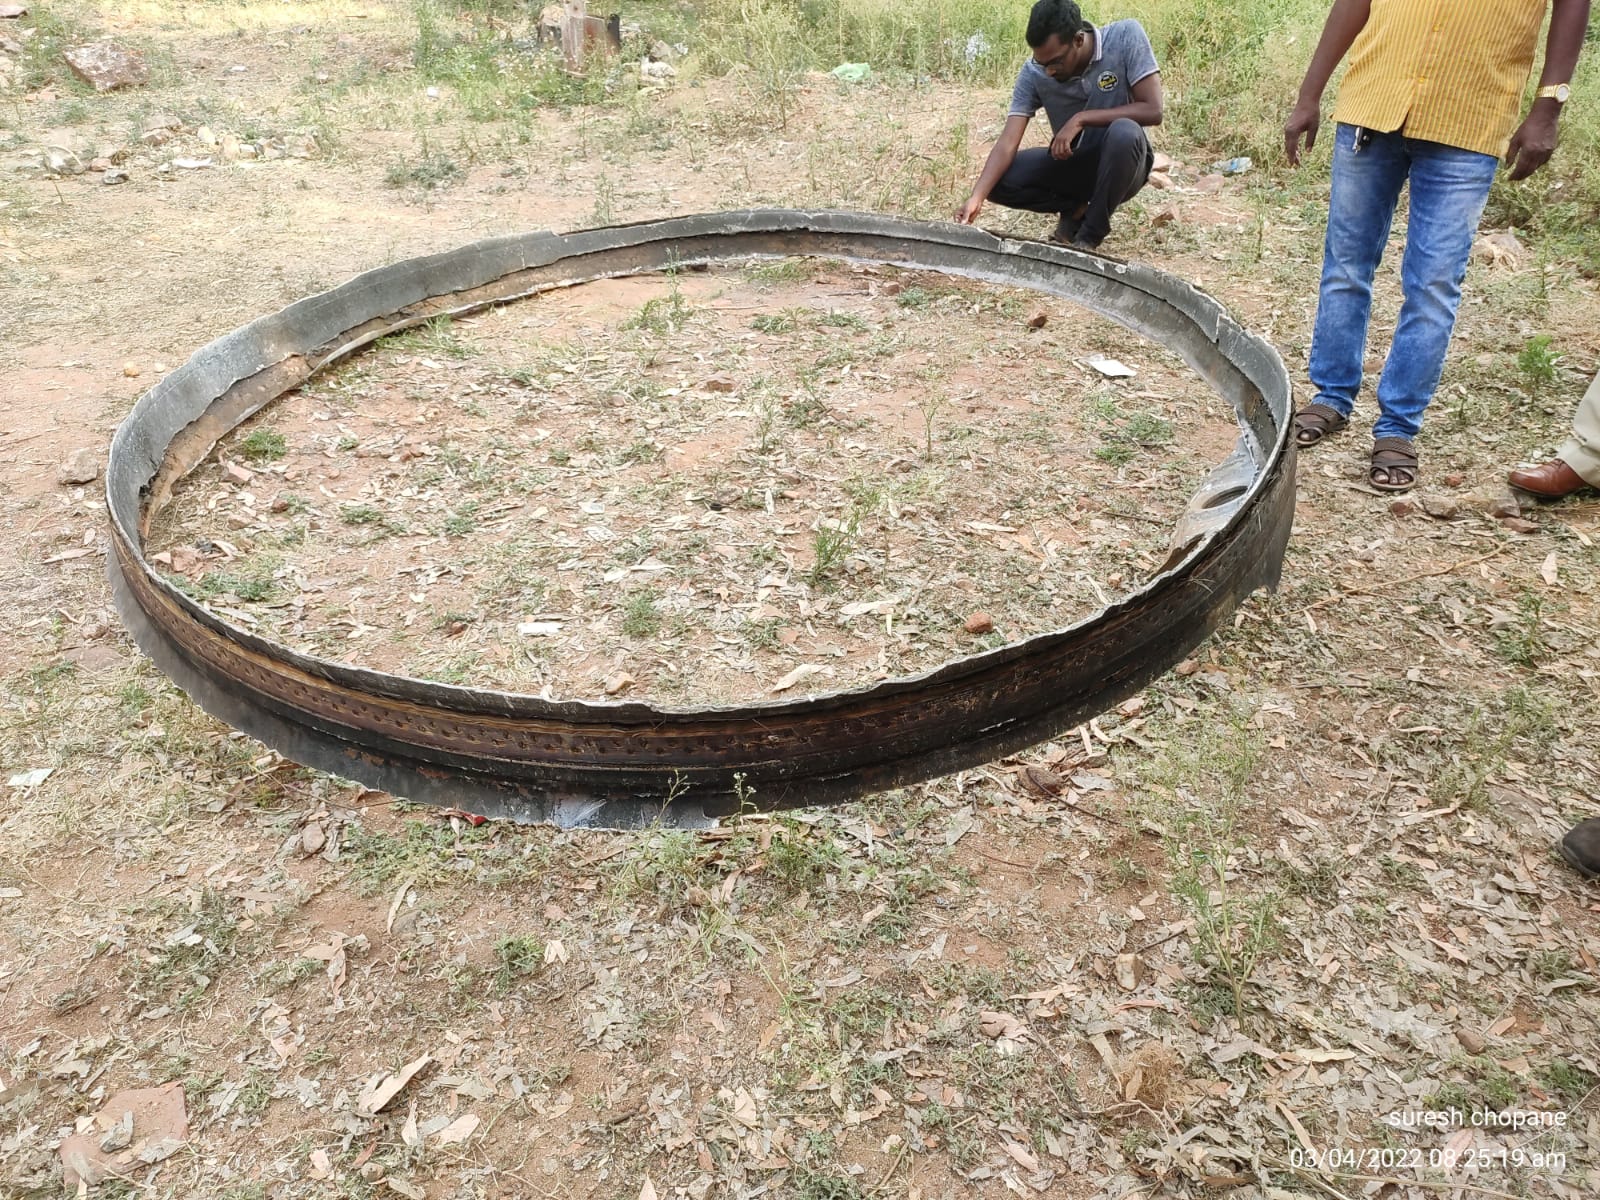 Burnt satellite fragments found in Maharashtra village